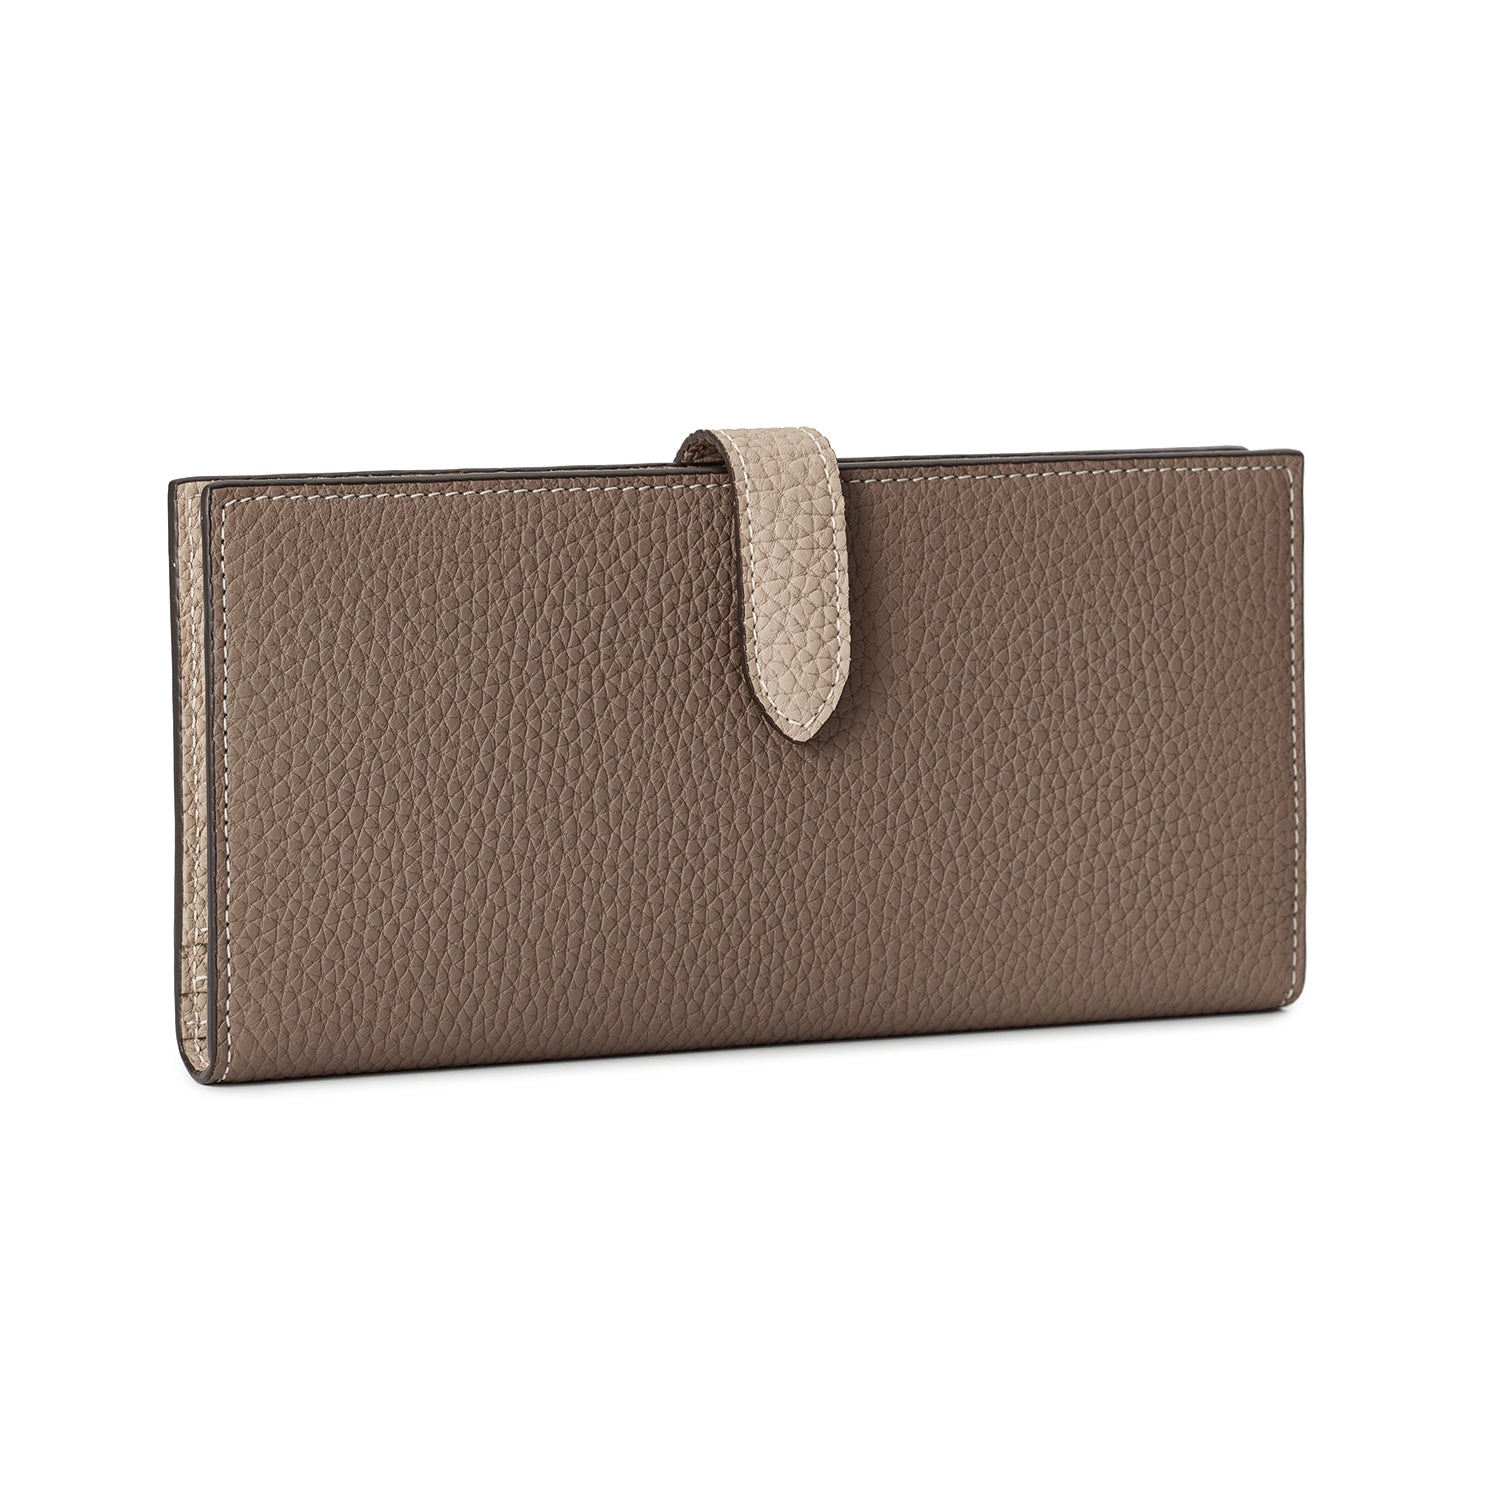 Belted long wallet in shrink leather